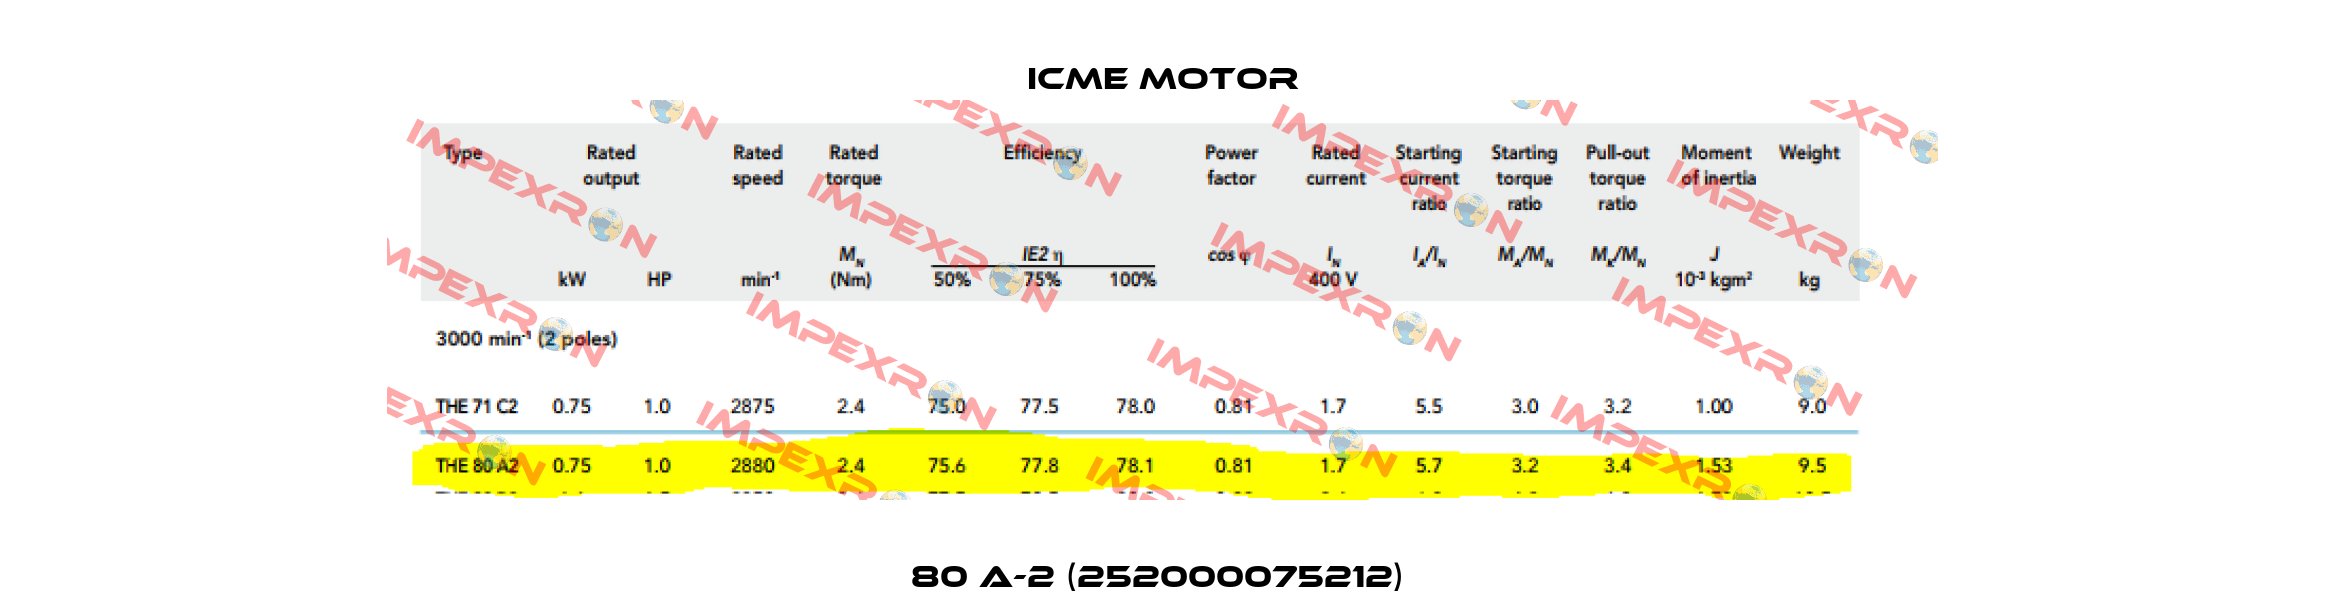 80 A-2 (252000075212)  Icme Motor